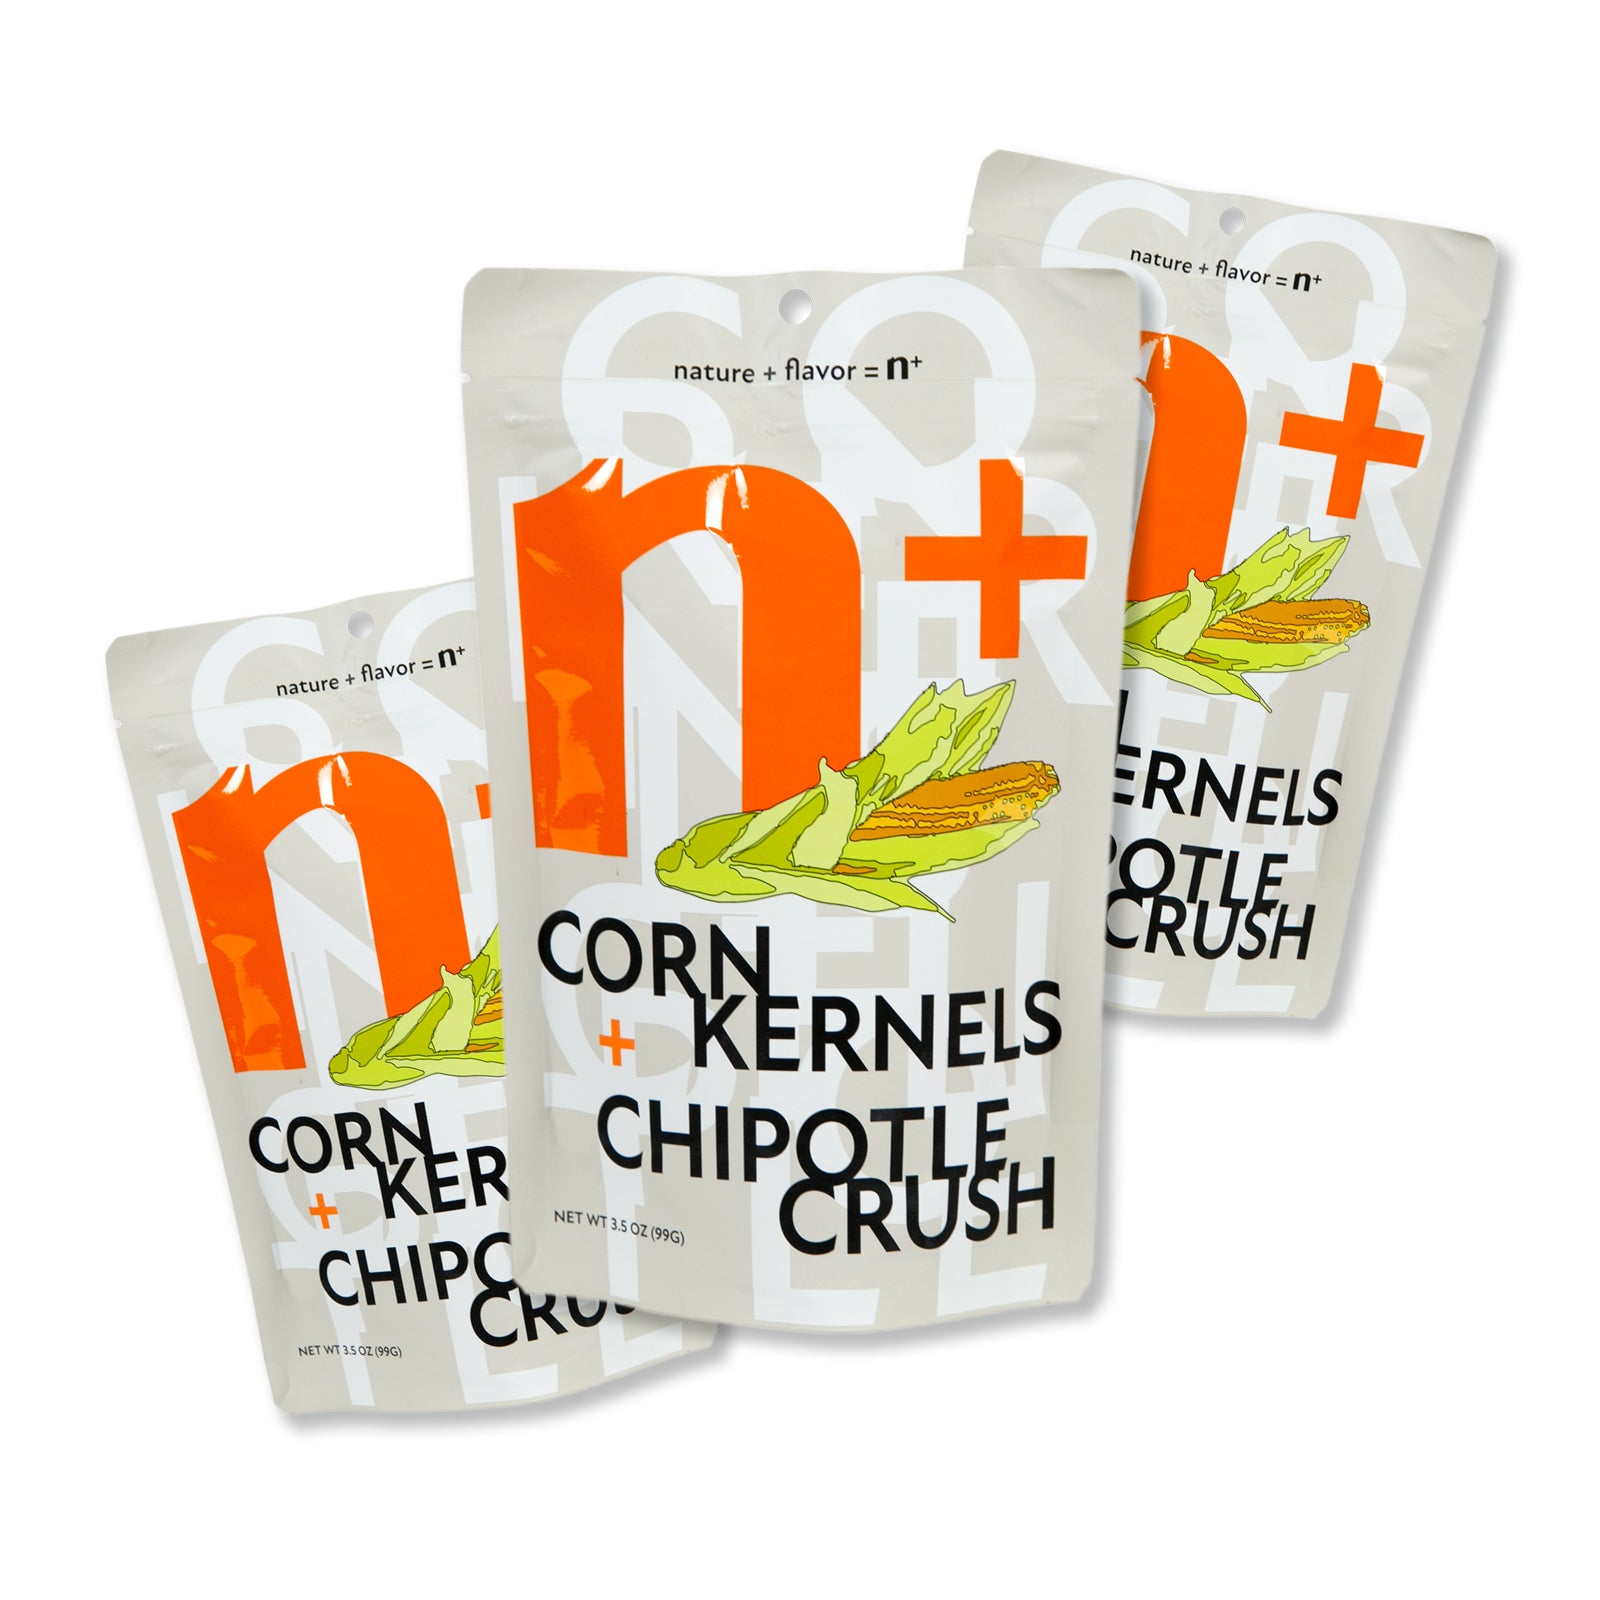 Corn Kernels + Chipotle Crush